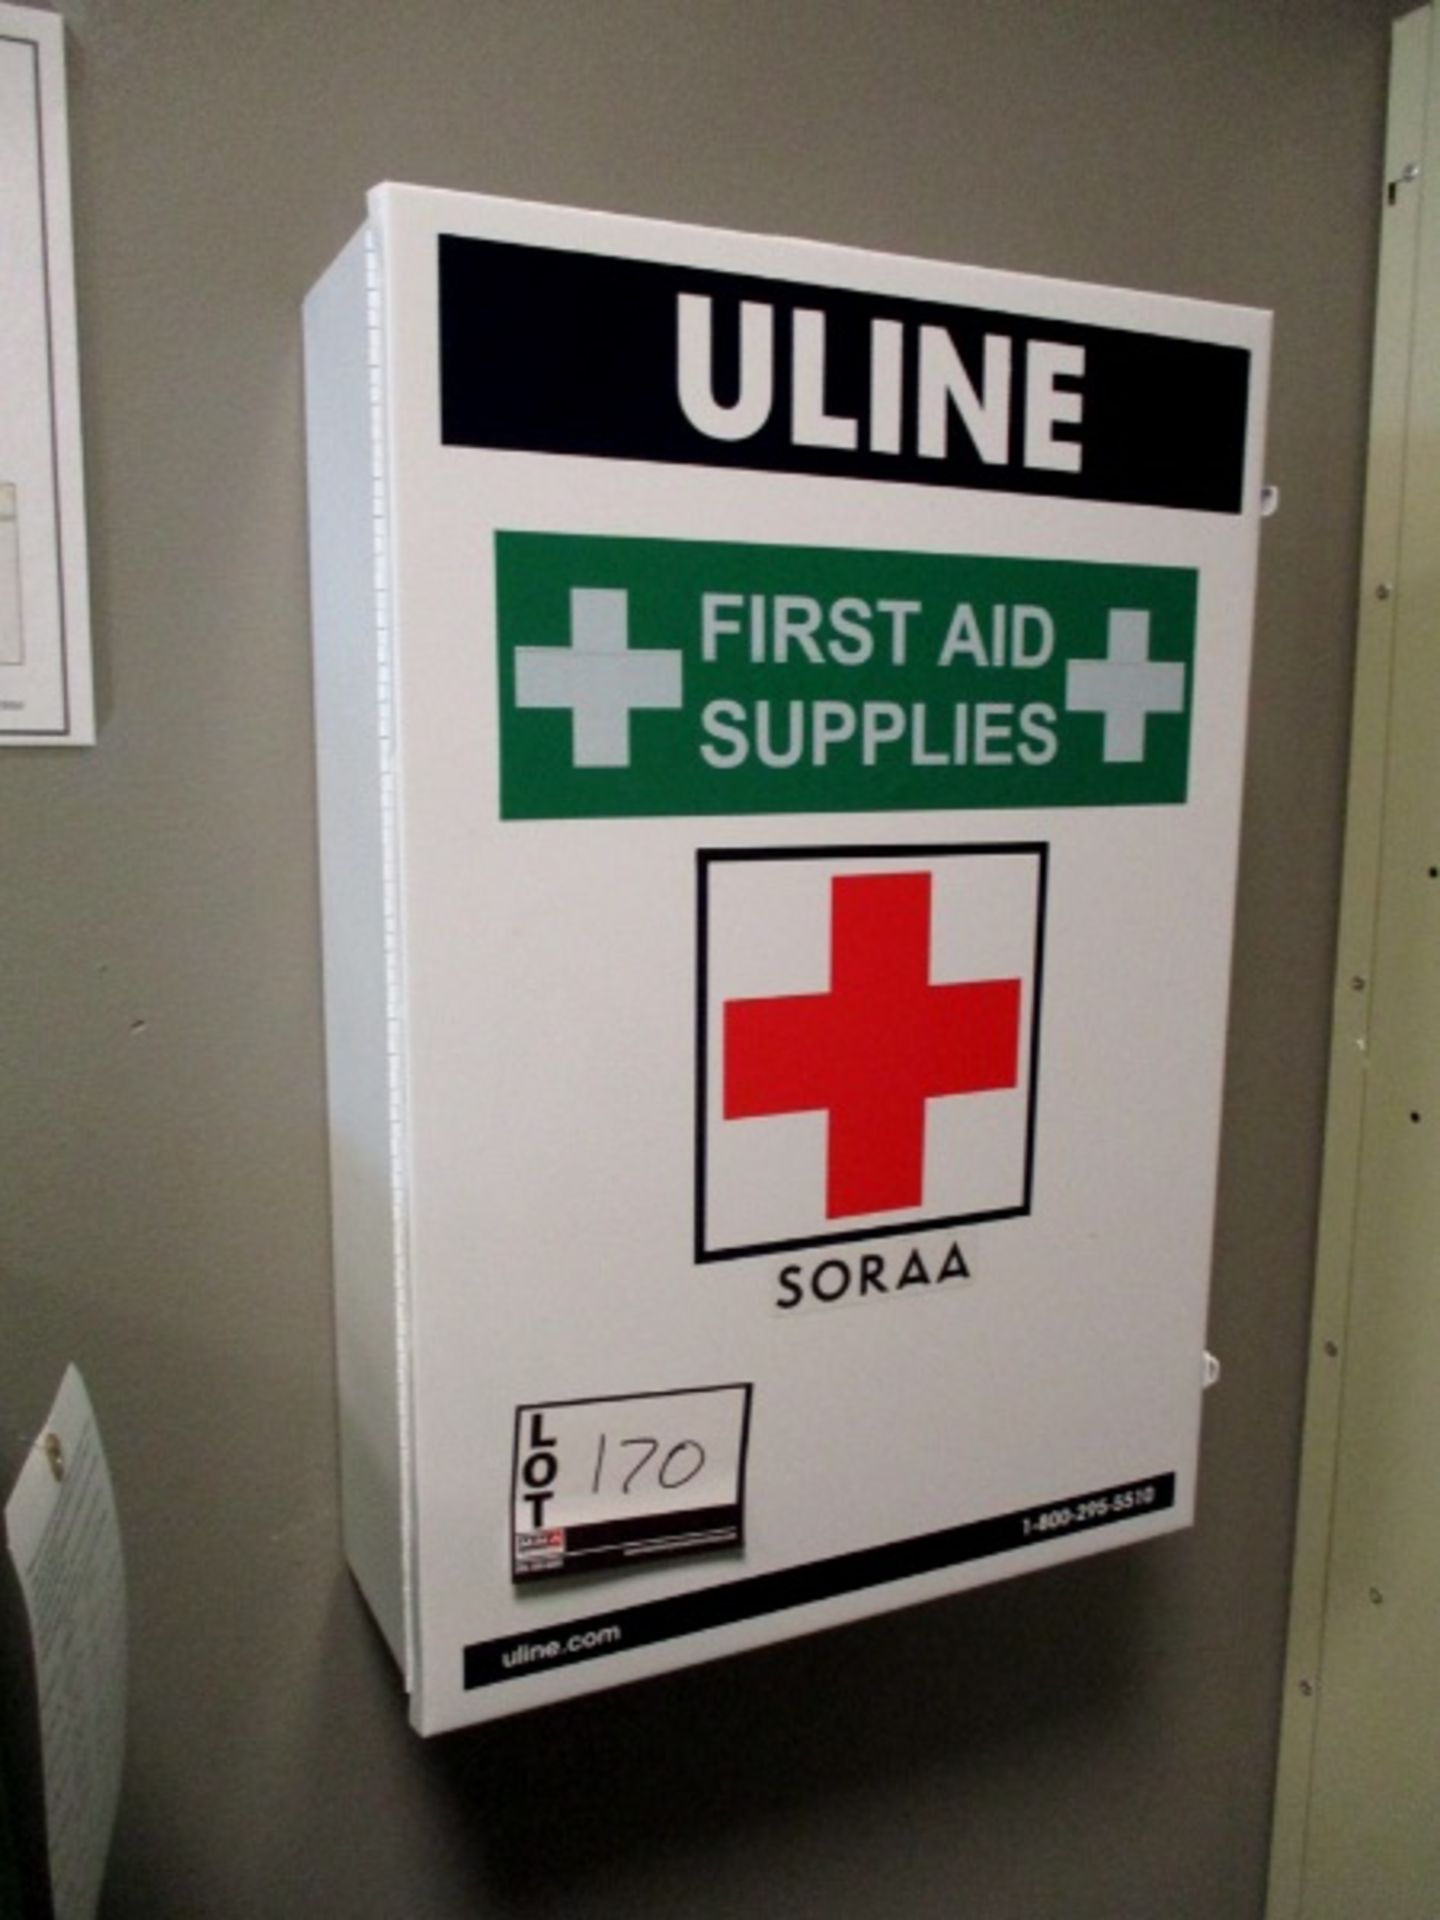 Sperian Emergency Eyewash and Uline first aid supplies - Image 3 of 4